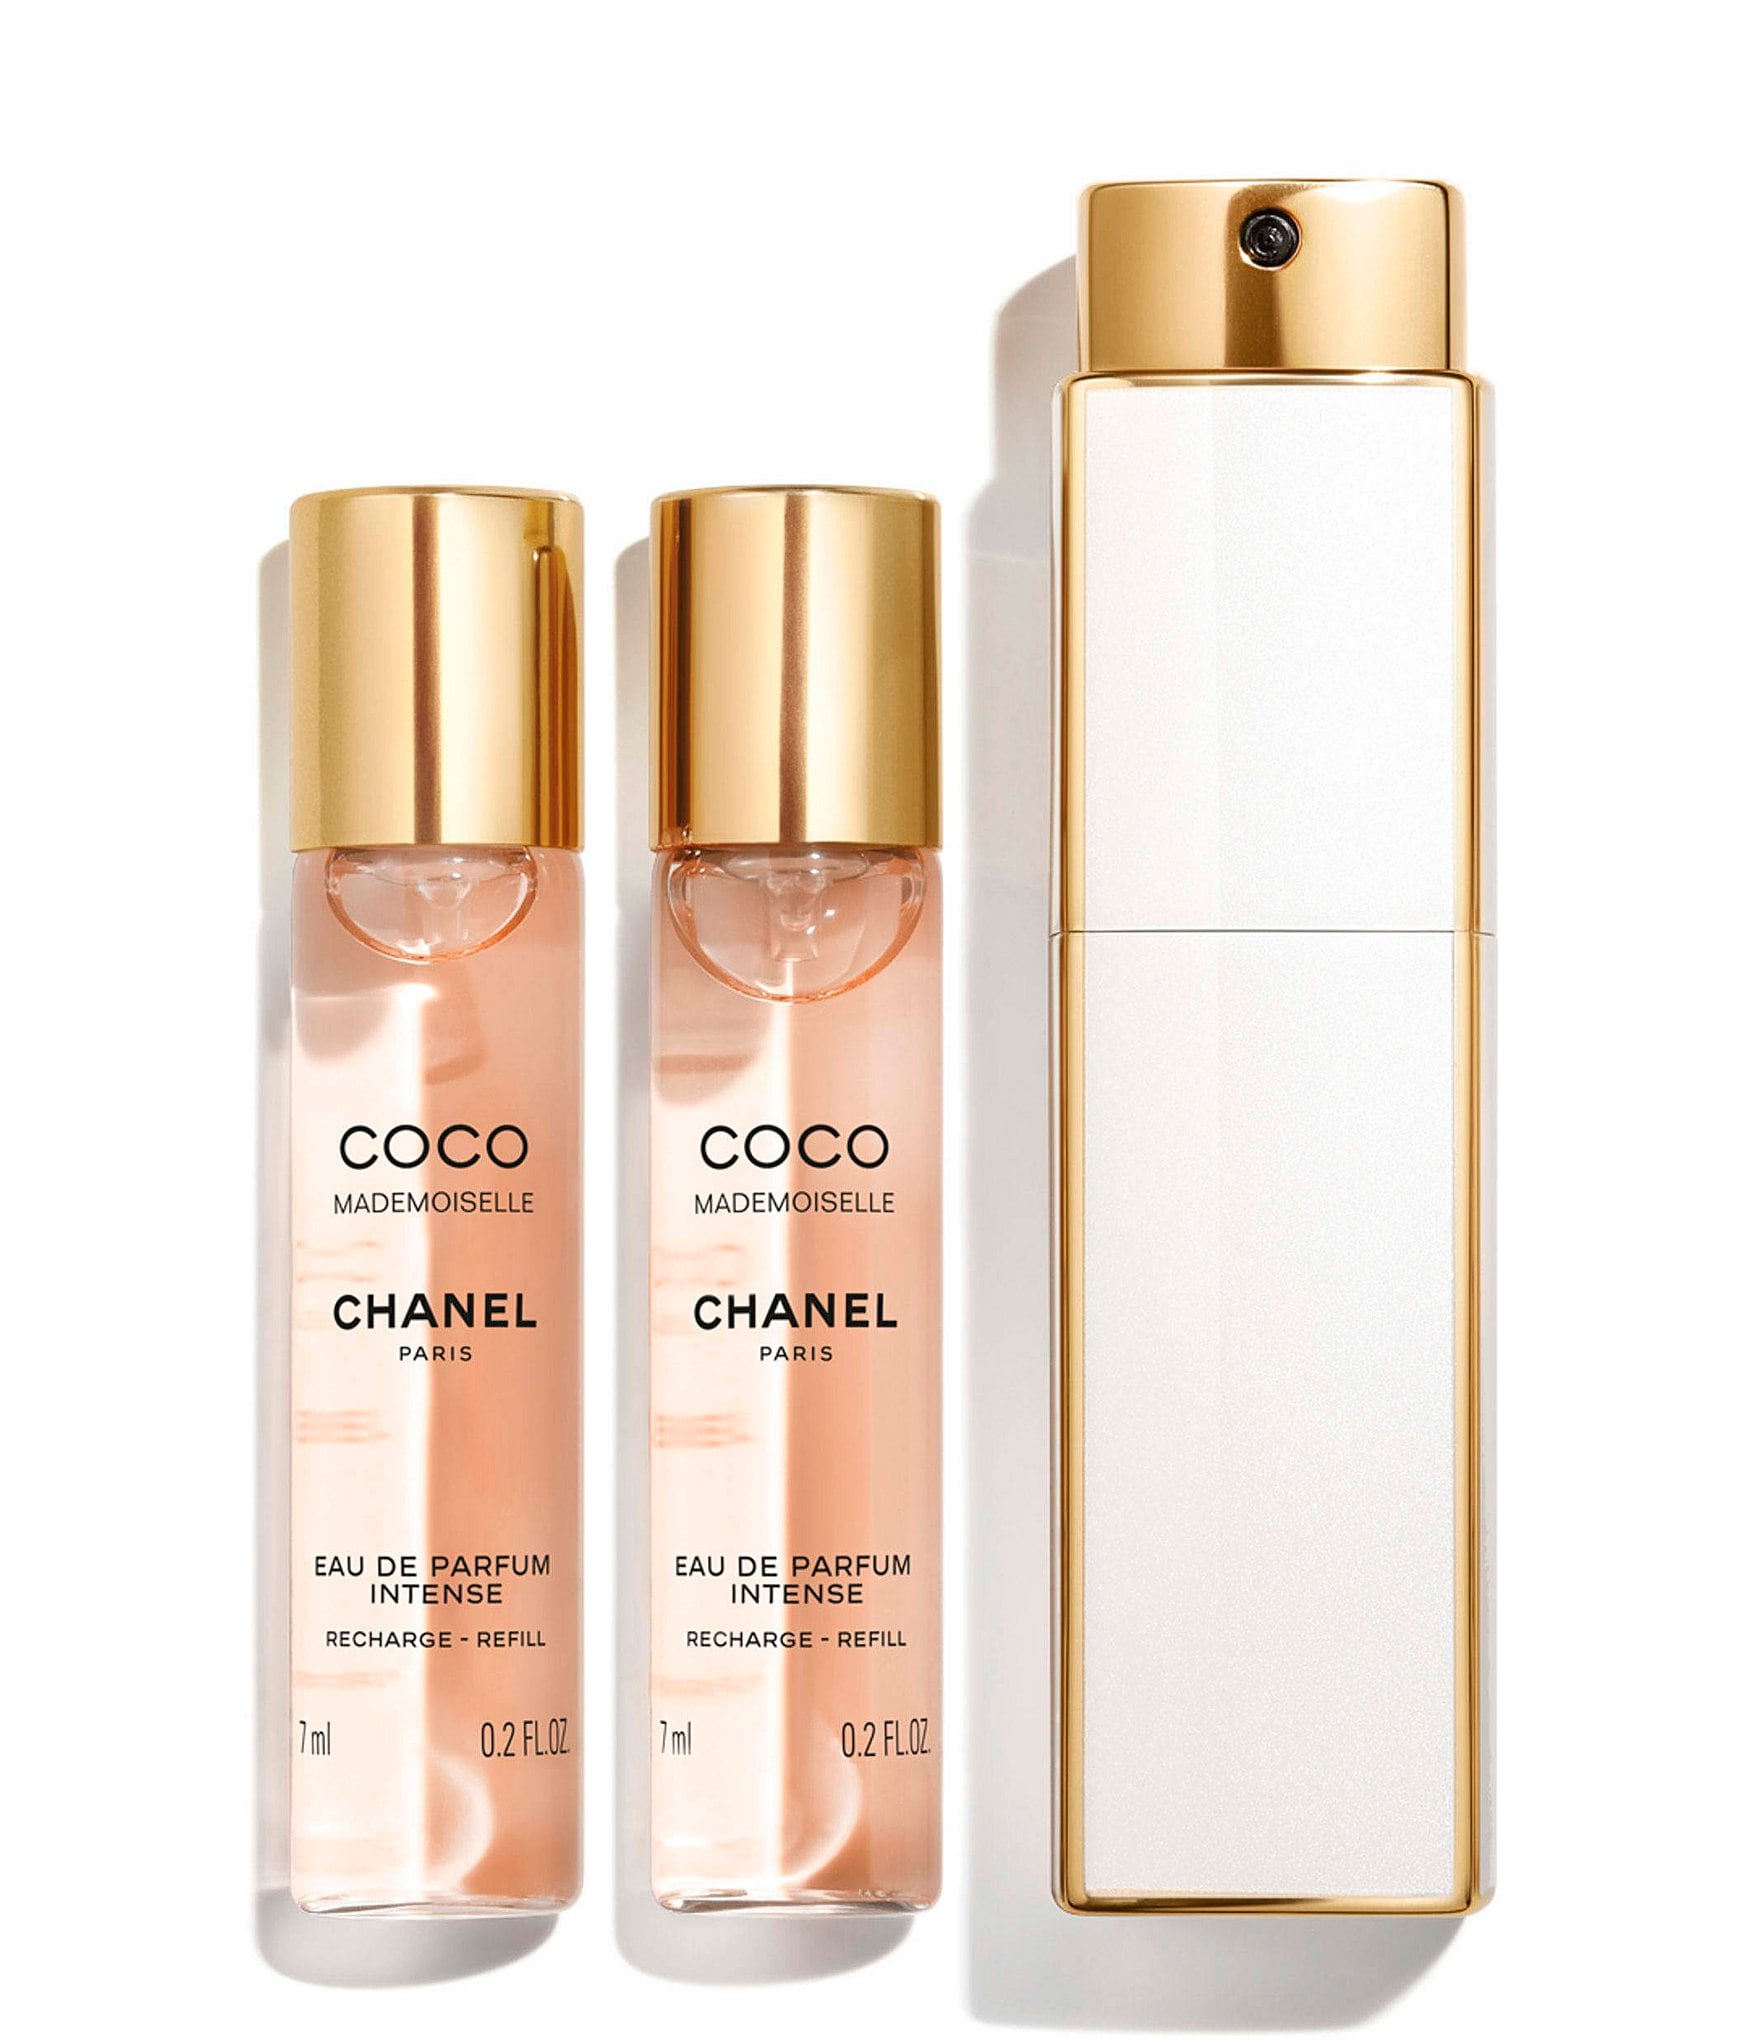 Chanel - Coco Mademoiselle L'Eau Privee Night Fragrance Spray